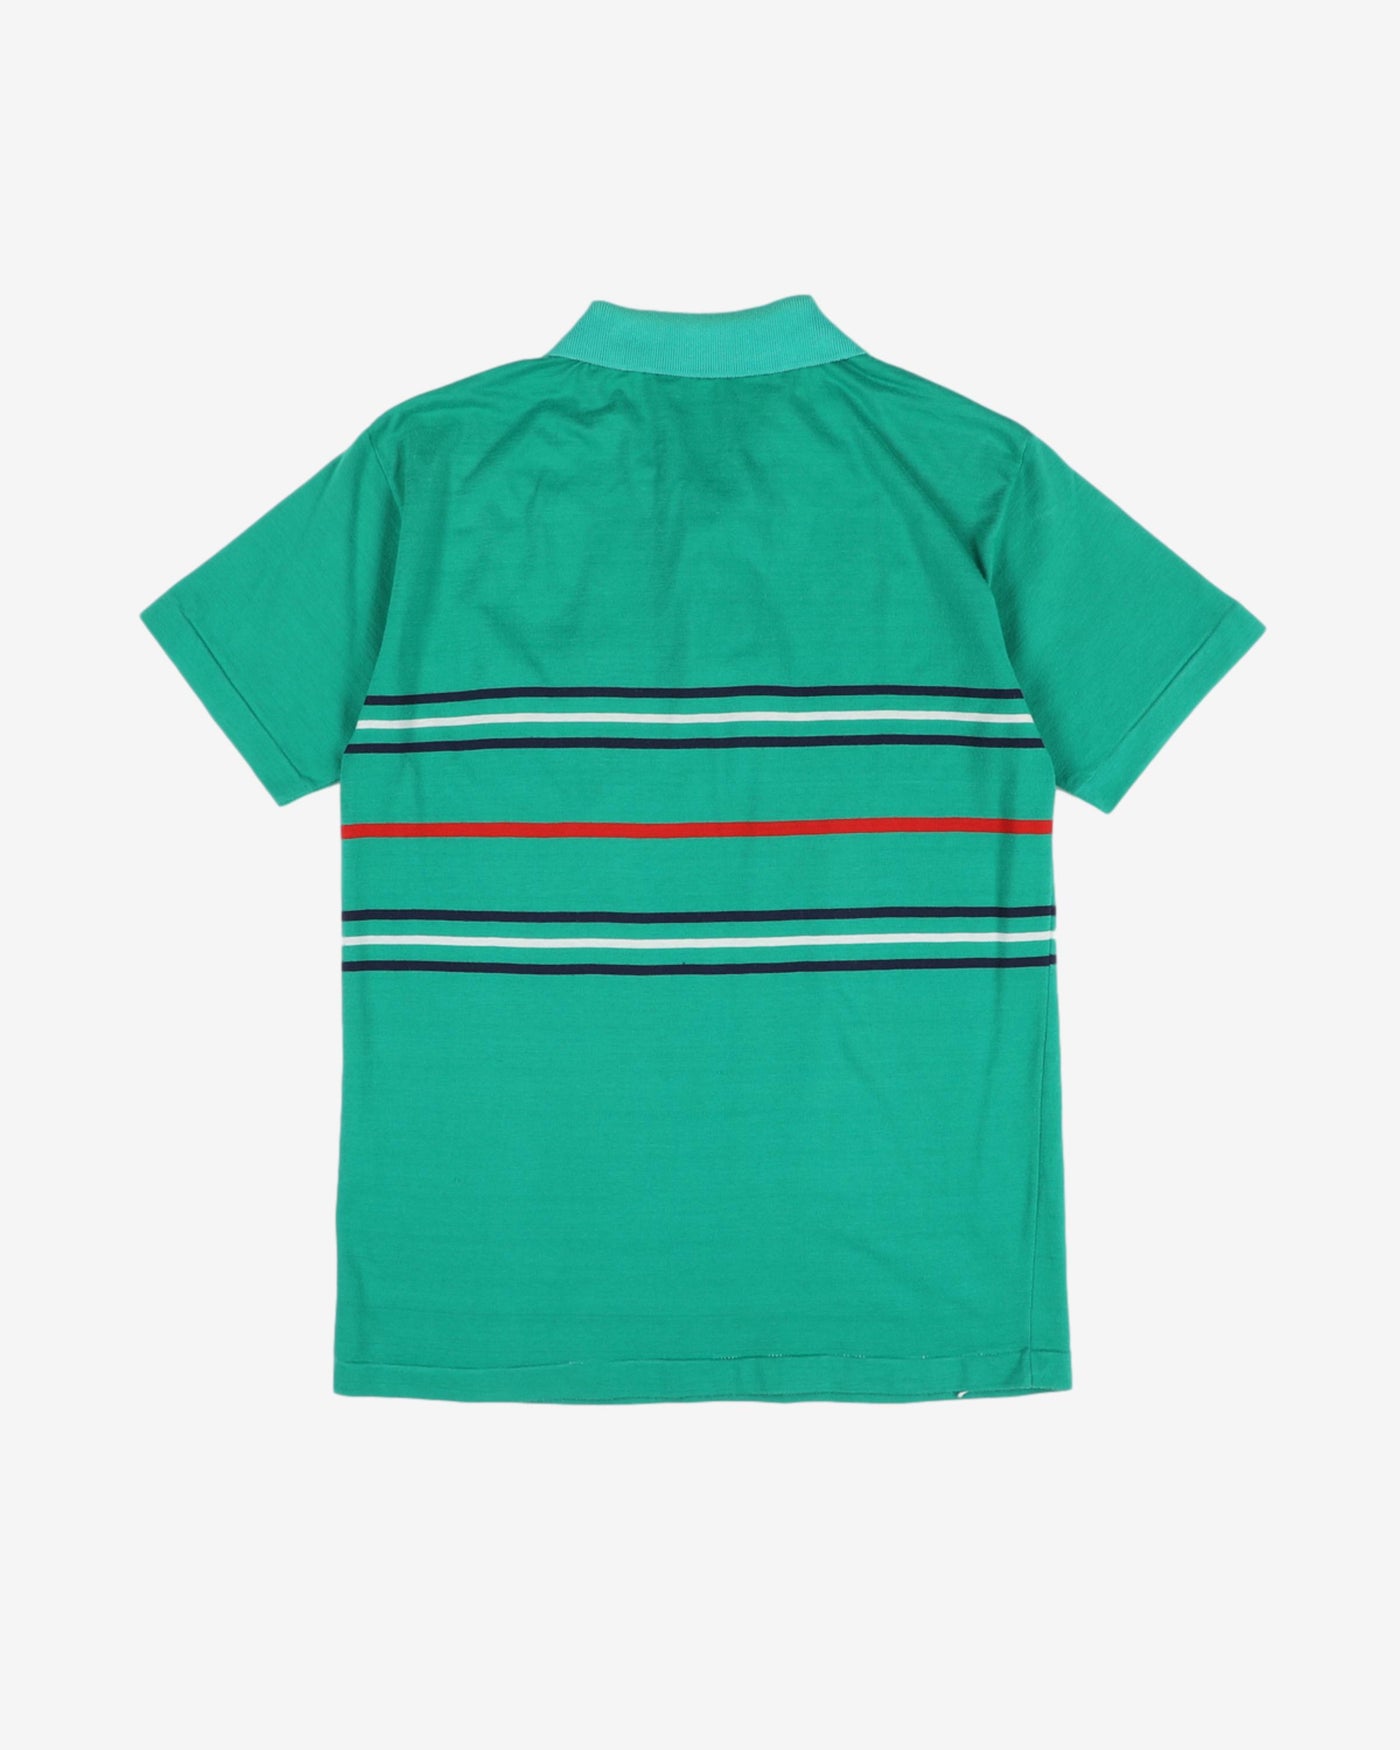 fila green striped polo shirt - s